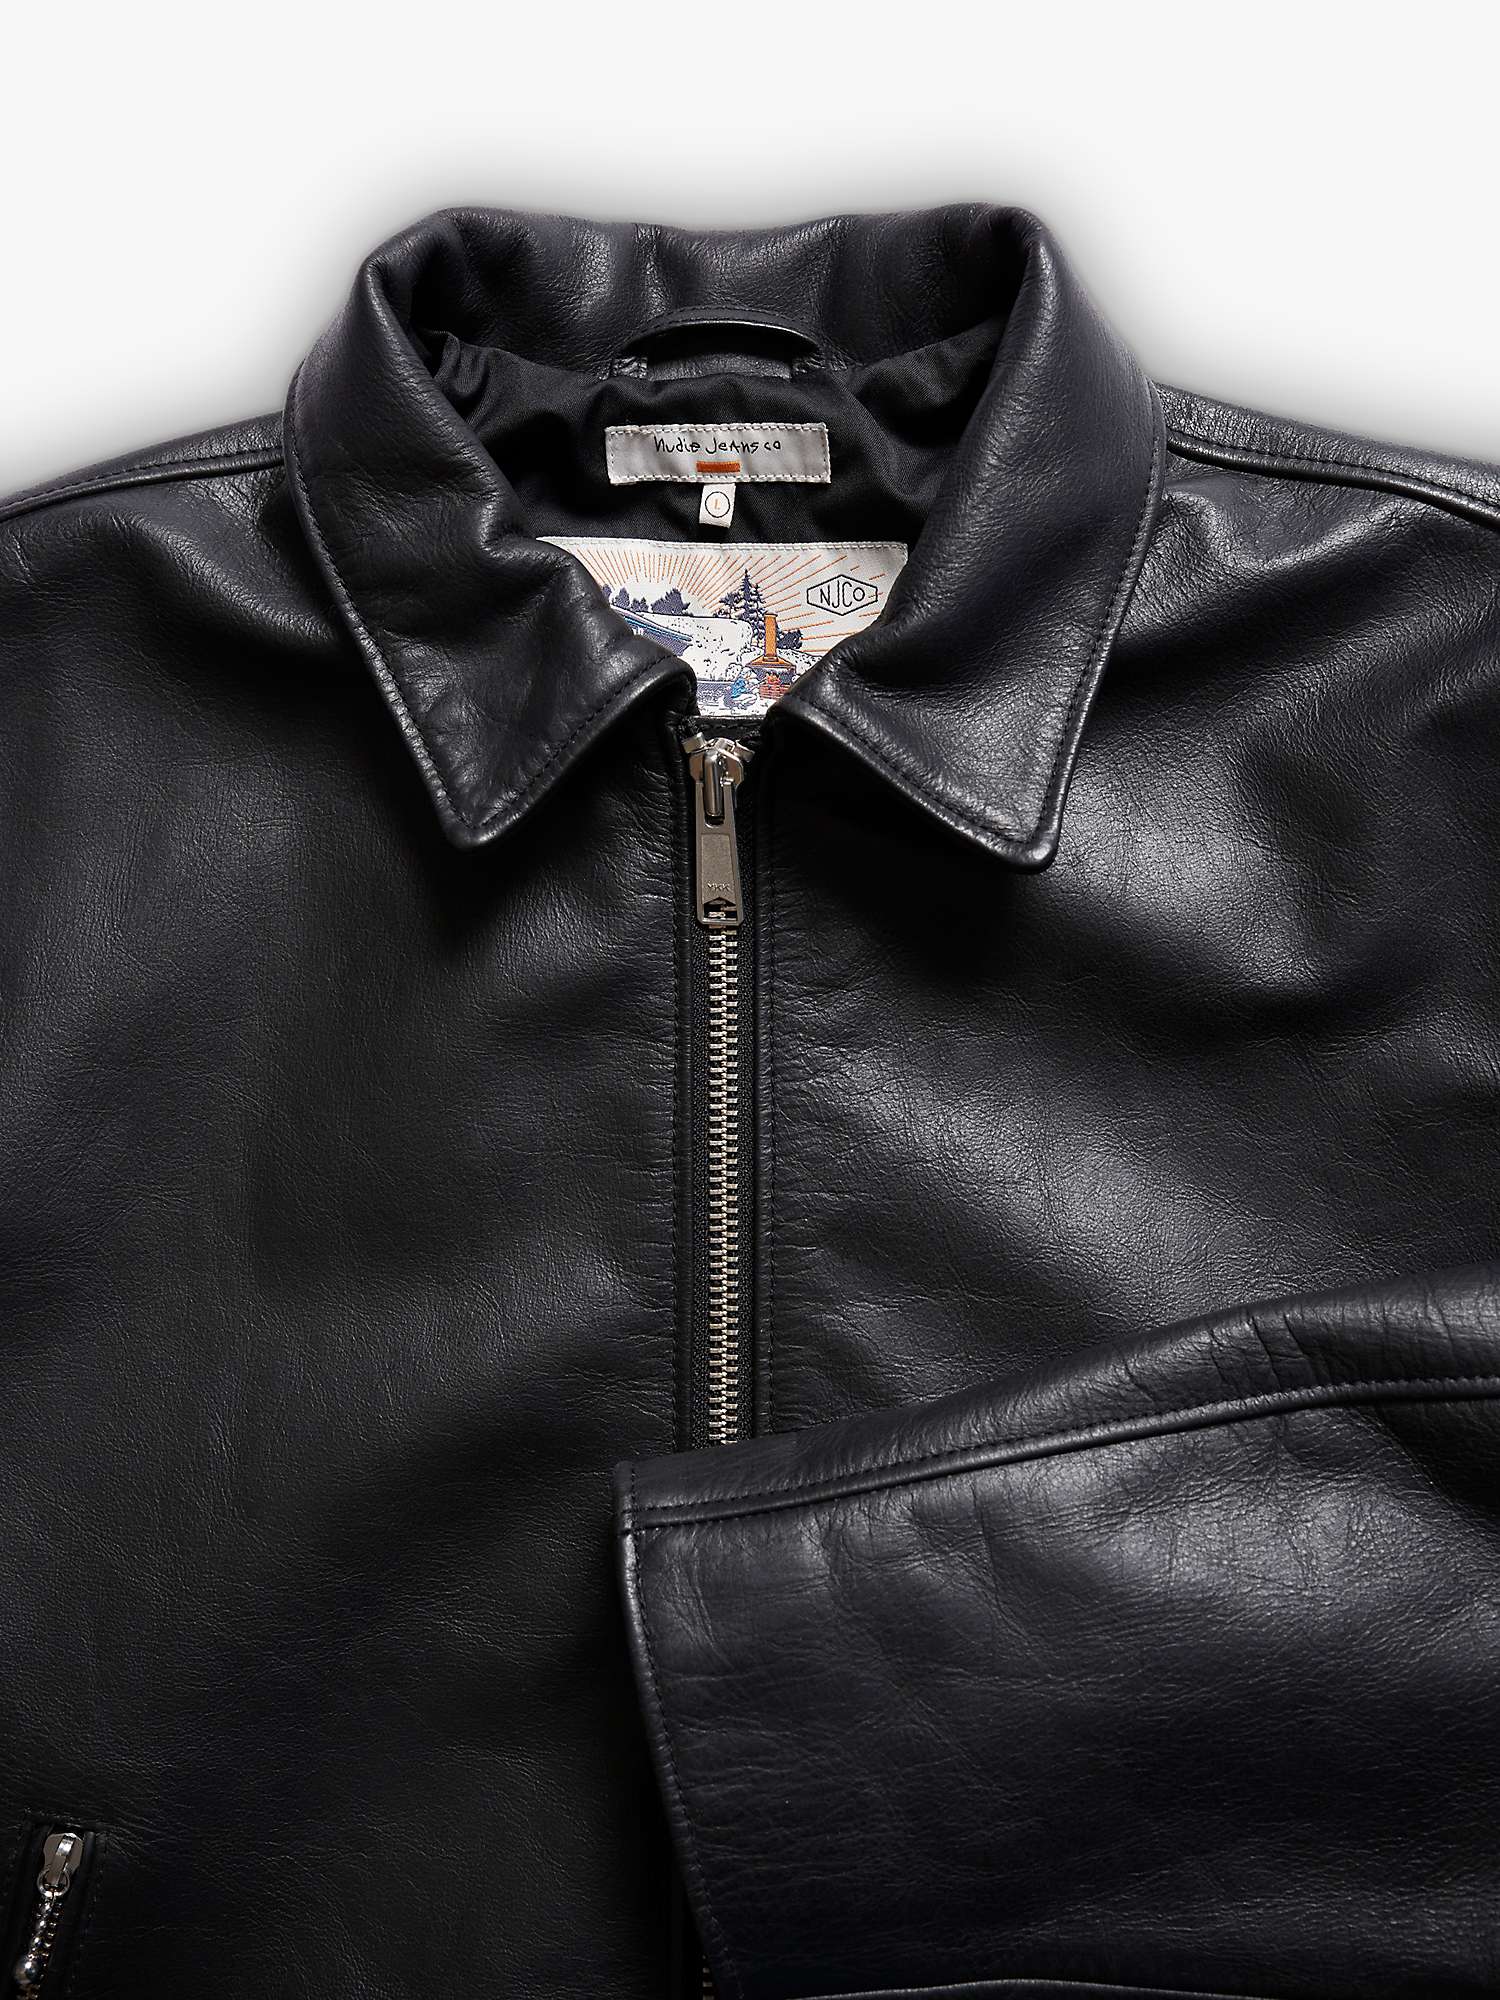 Nudie Jeans Eddy Rider Leather Jacket, Black at John Lewis & Partners